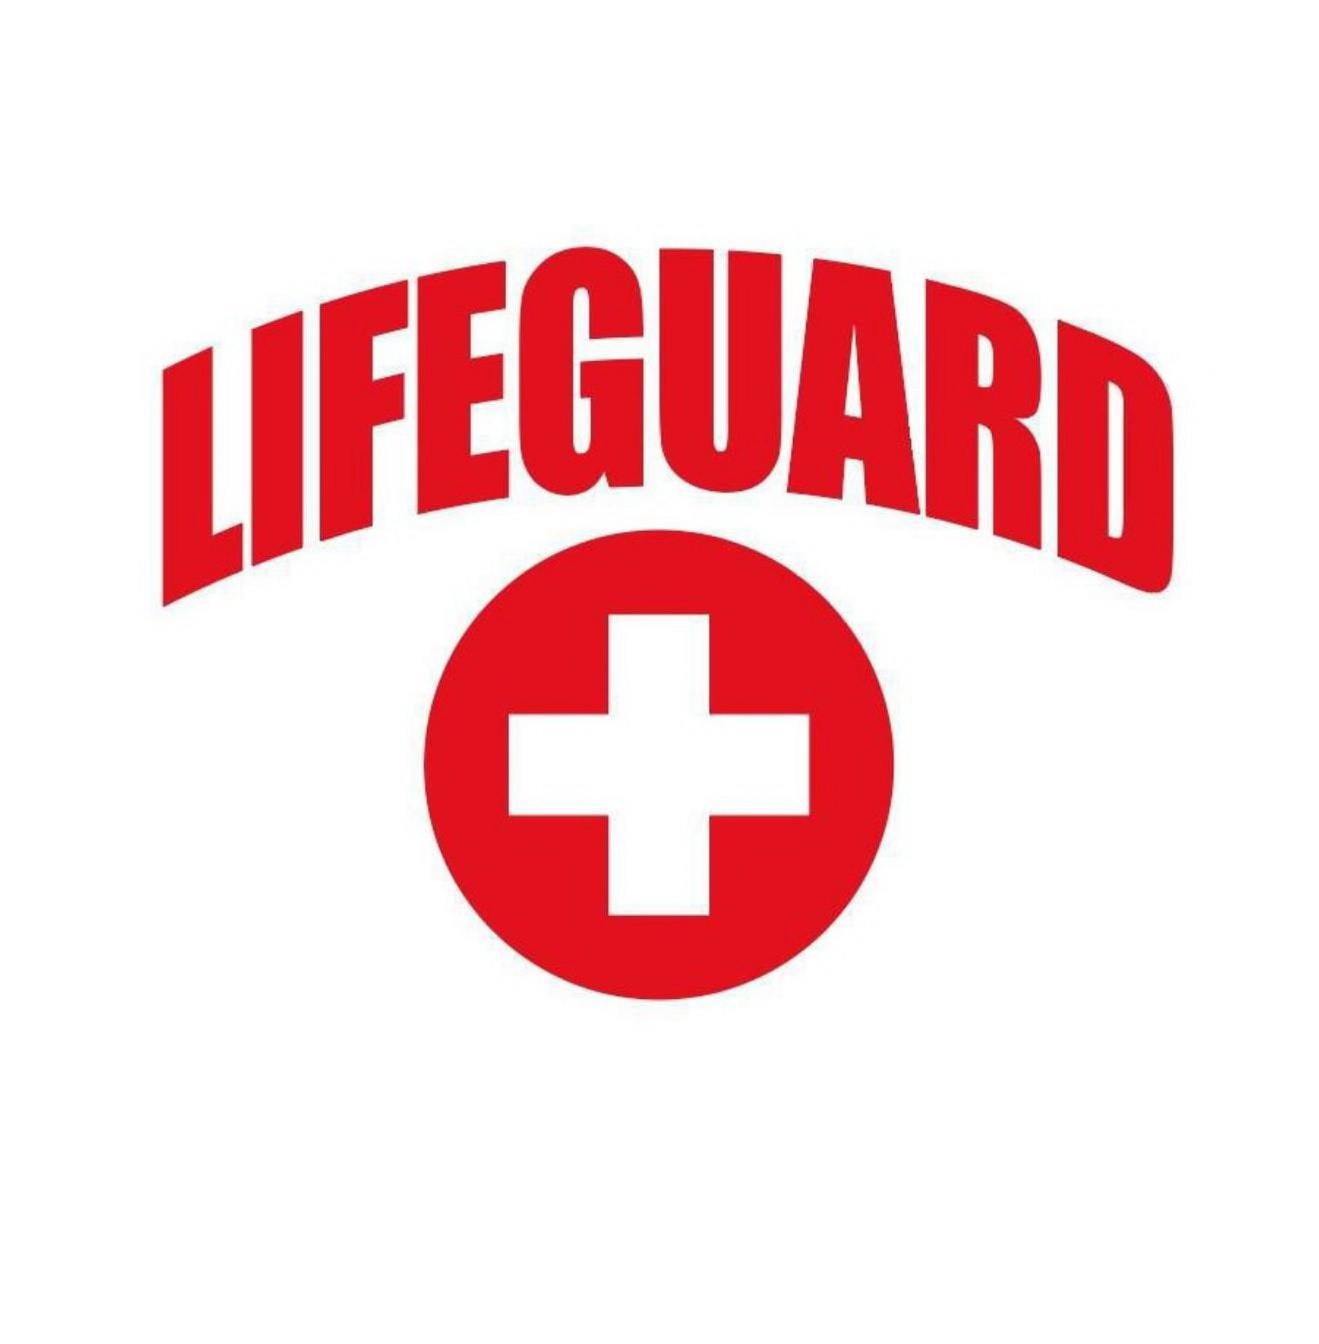 LIFEGUARD Lifeguard Licensing Corp. Trademark Registration